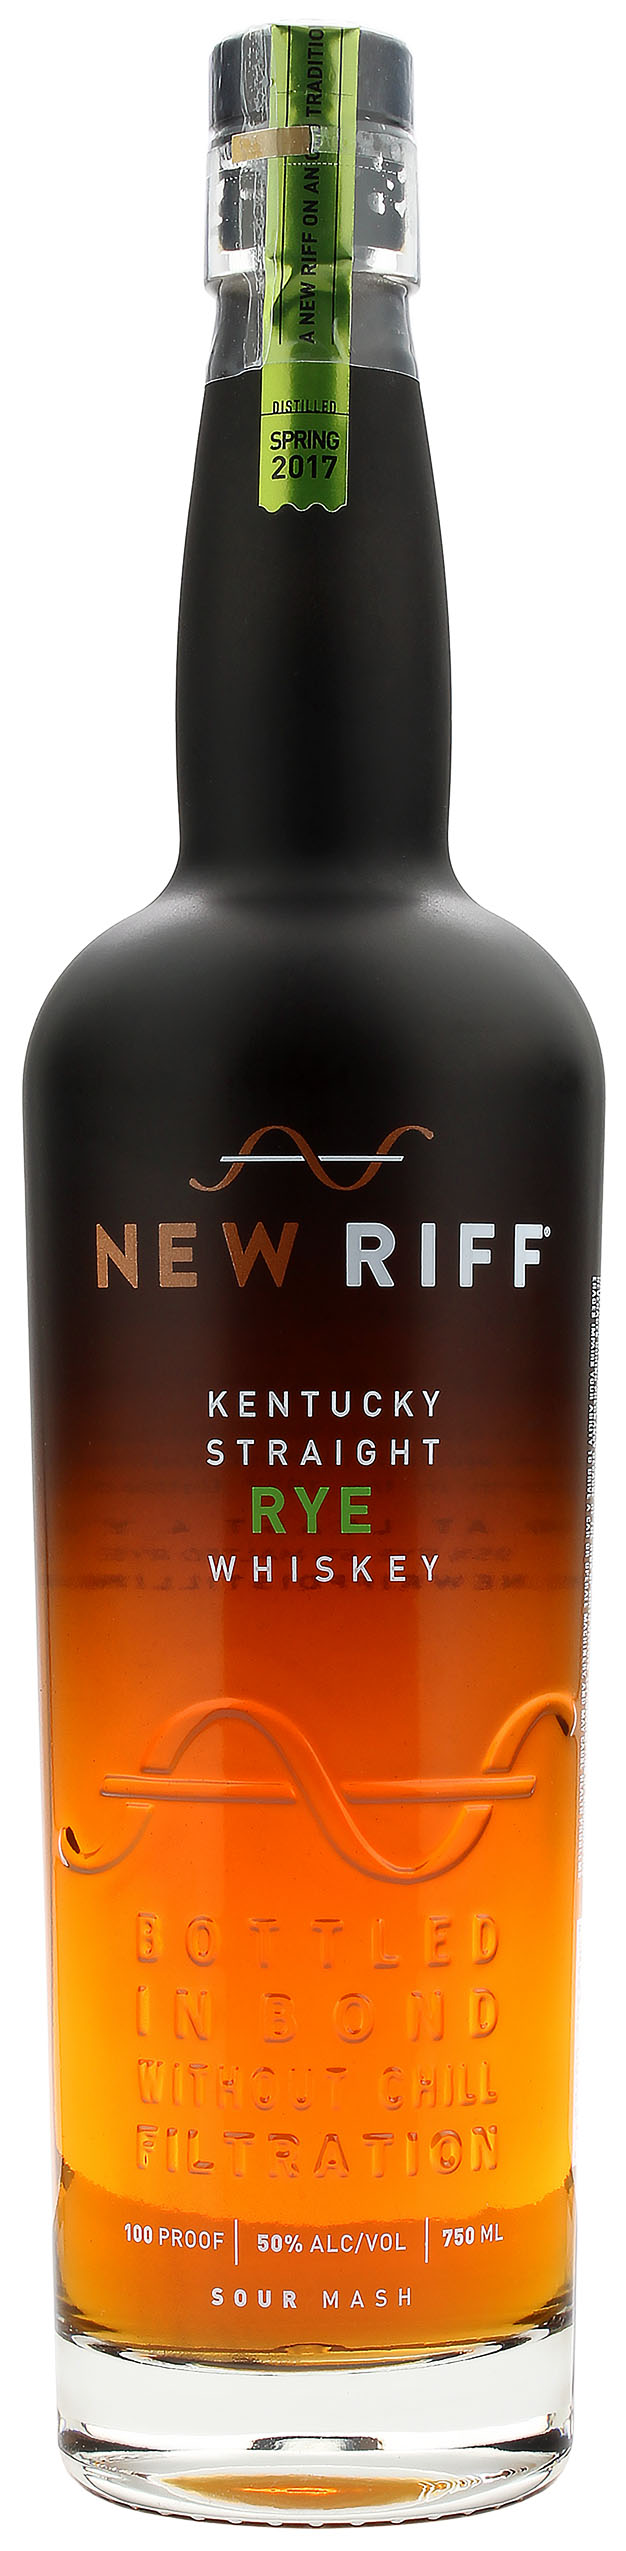 New Riff Kentucky Straight Rye Whiskey 50.0% 0,7l